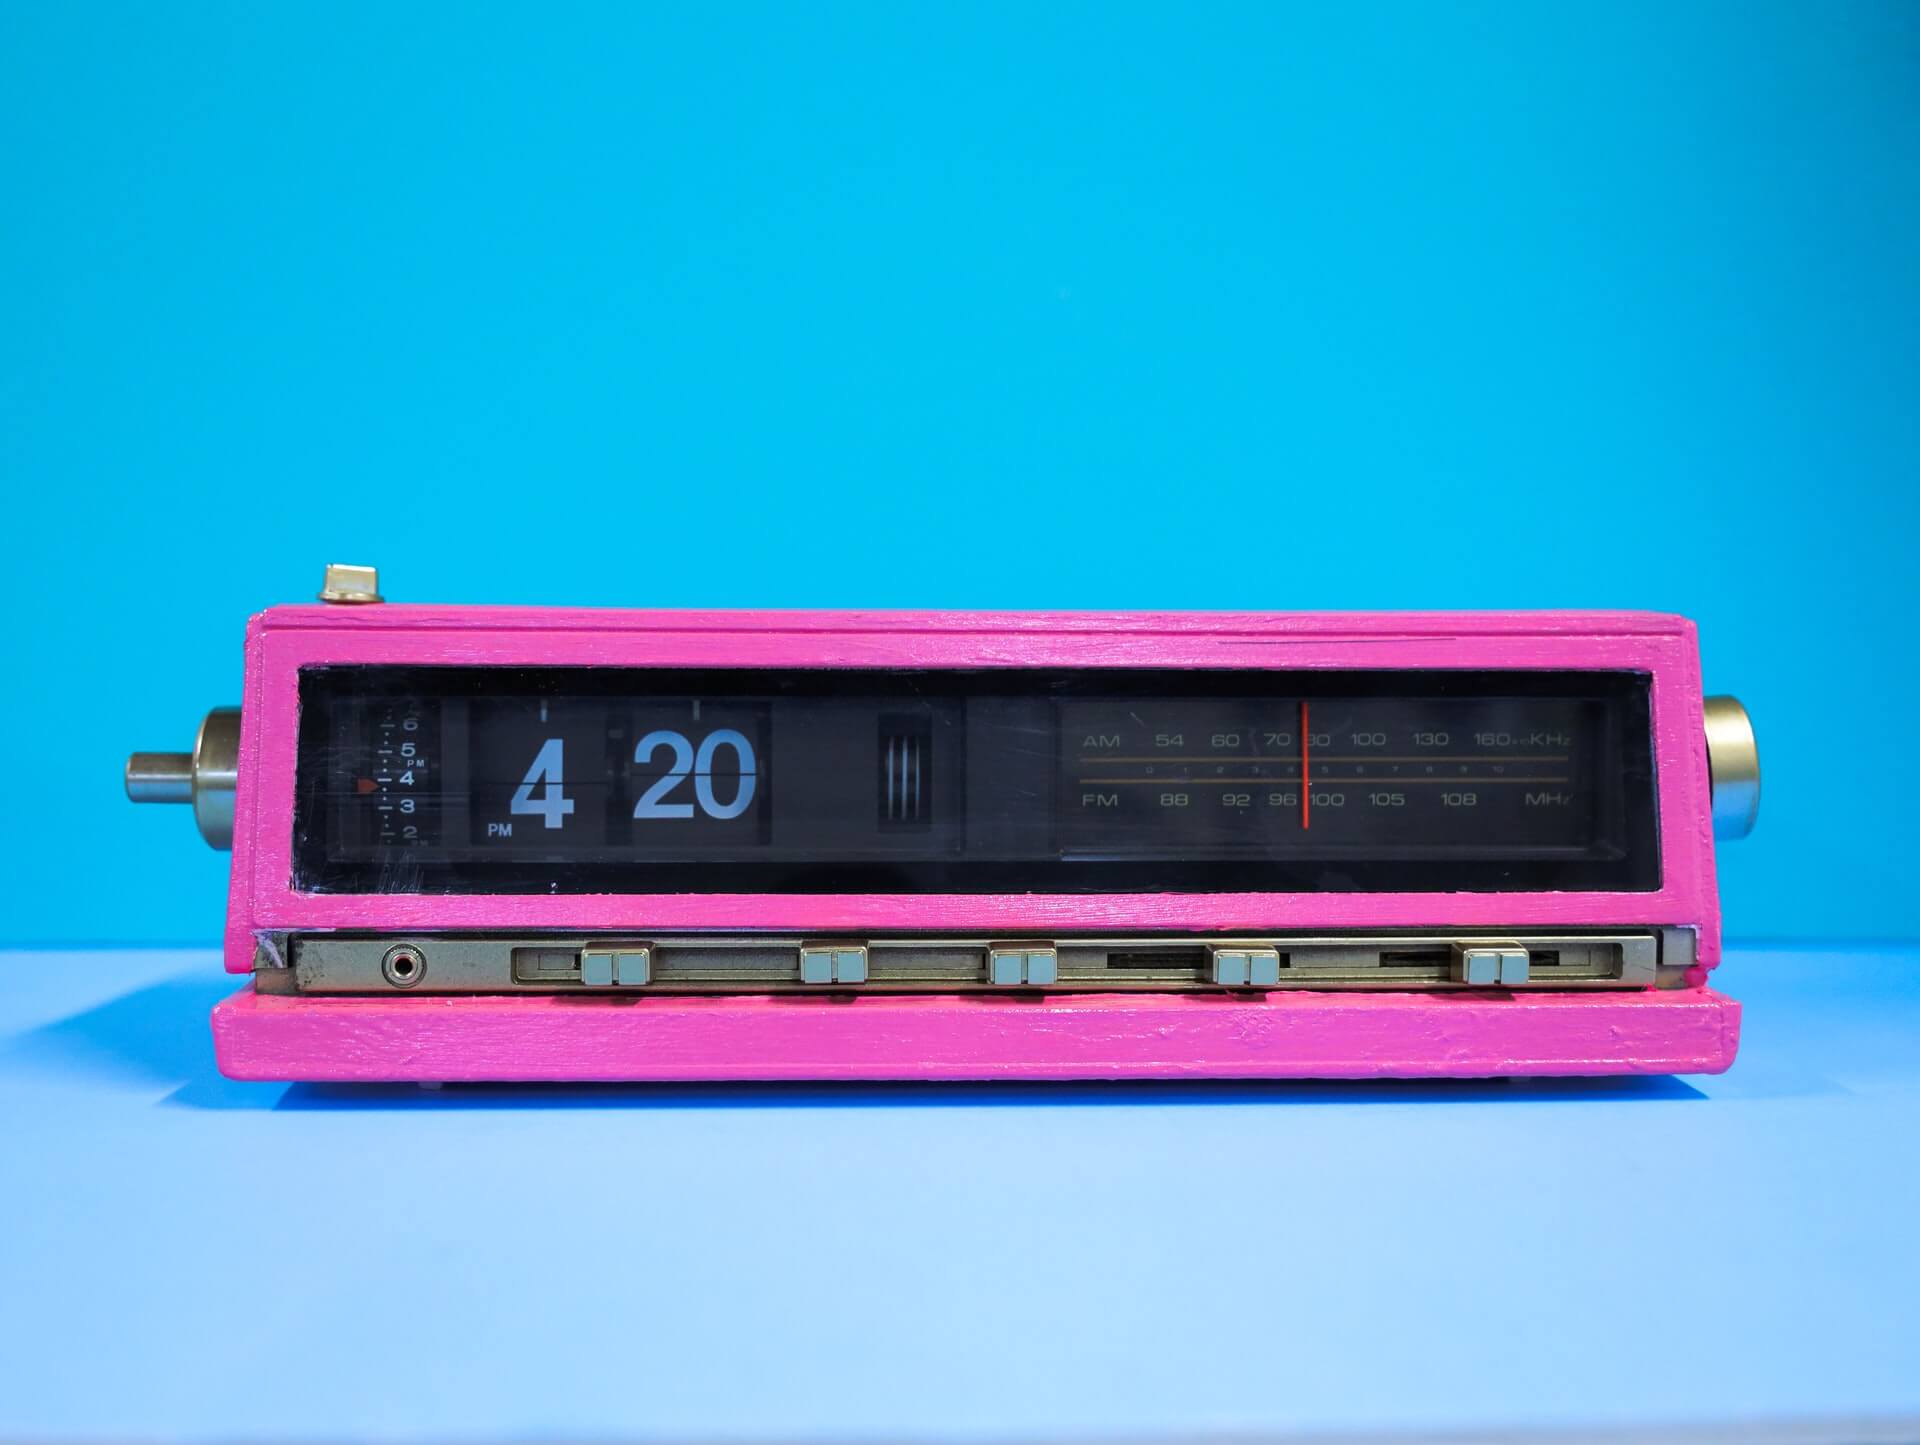 Pink alarm clock that reads 4:20